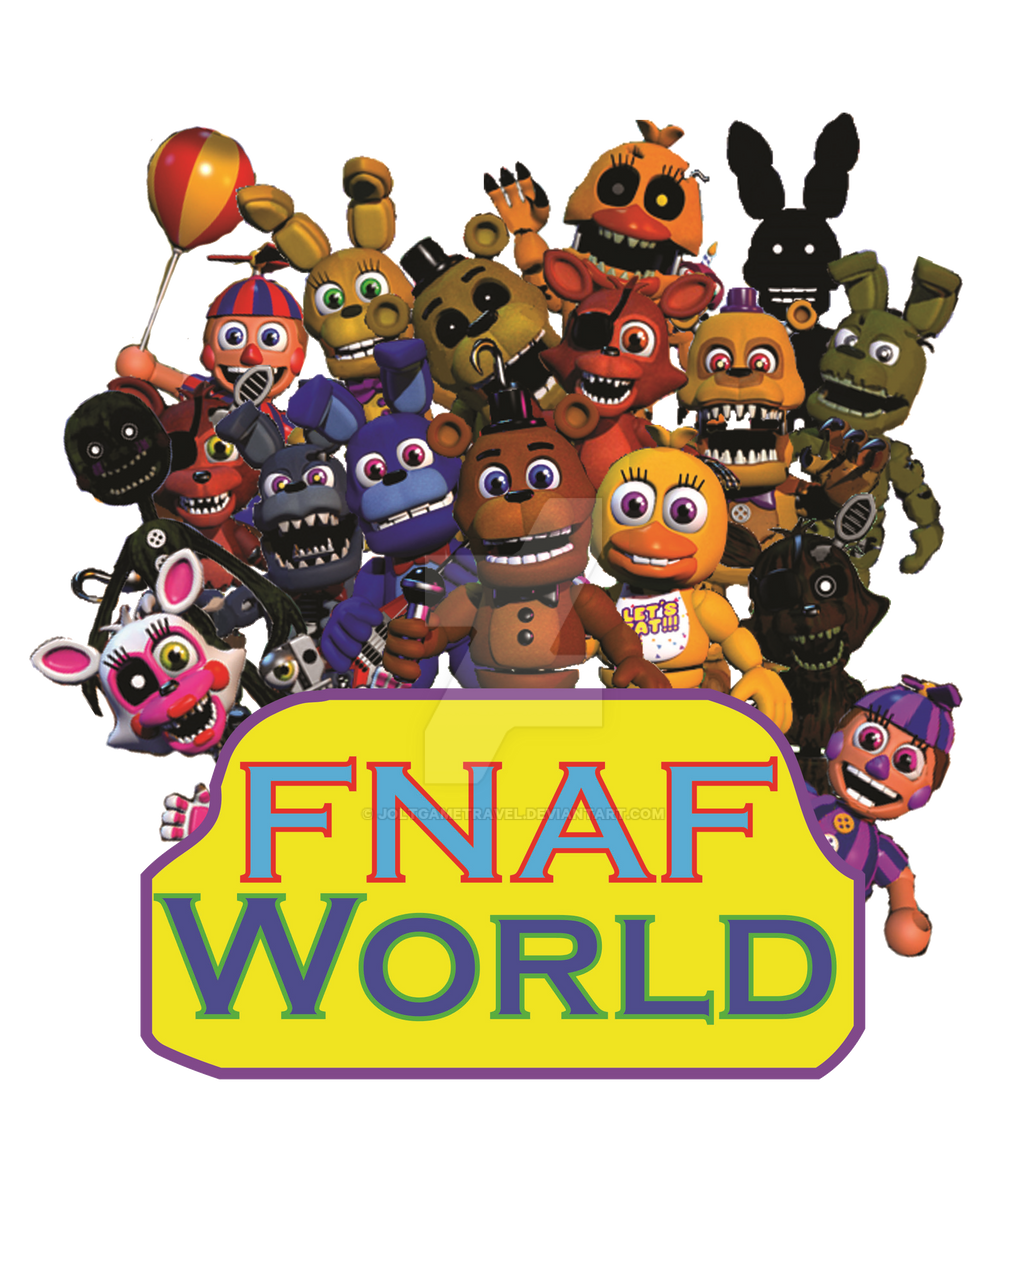 Here are some more FNAF World Random Renders I hope you like them